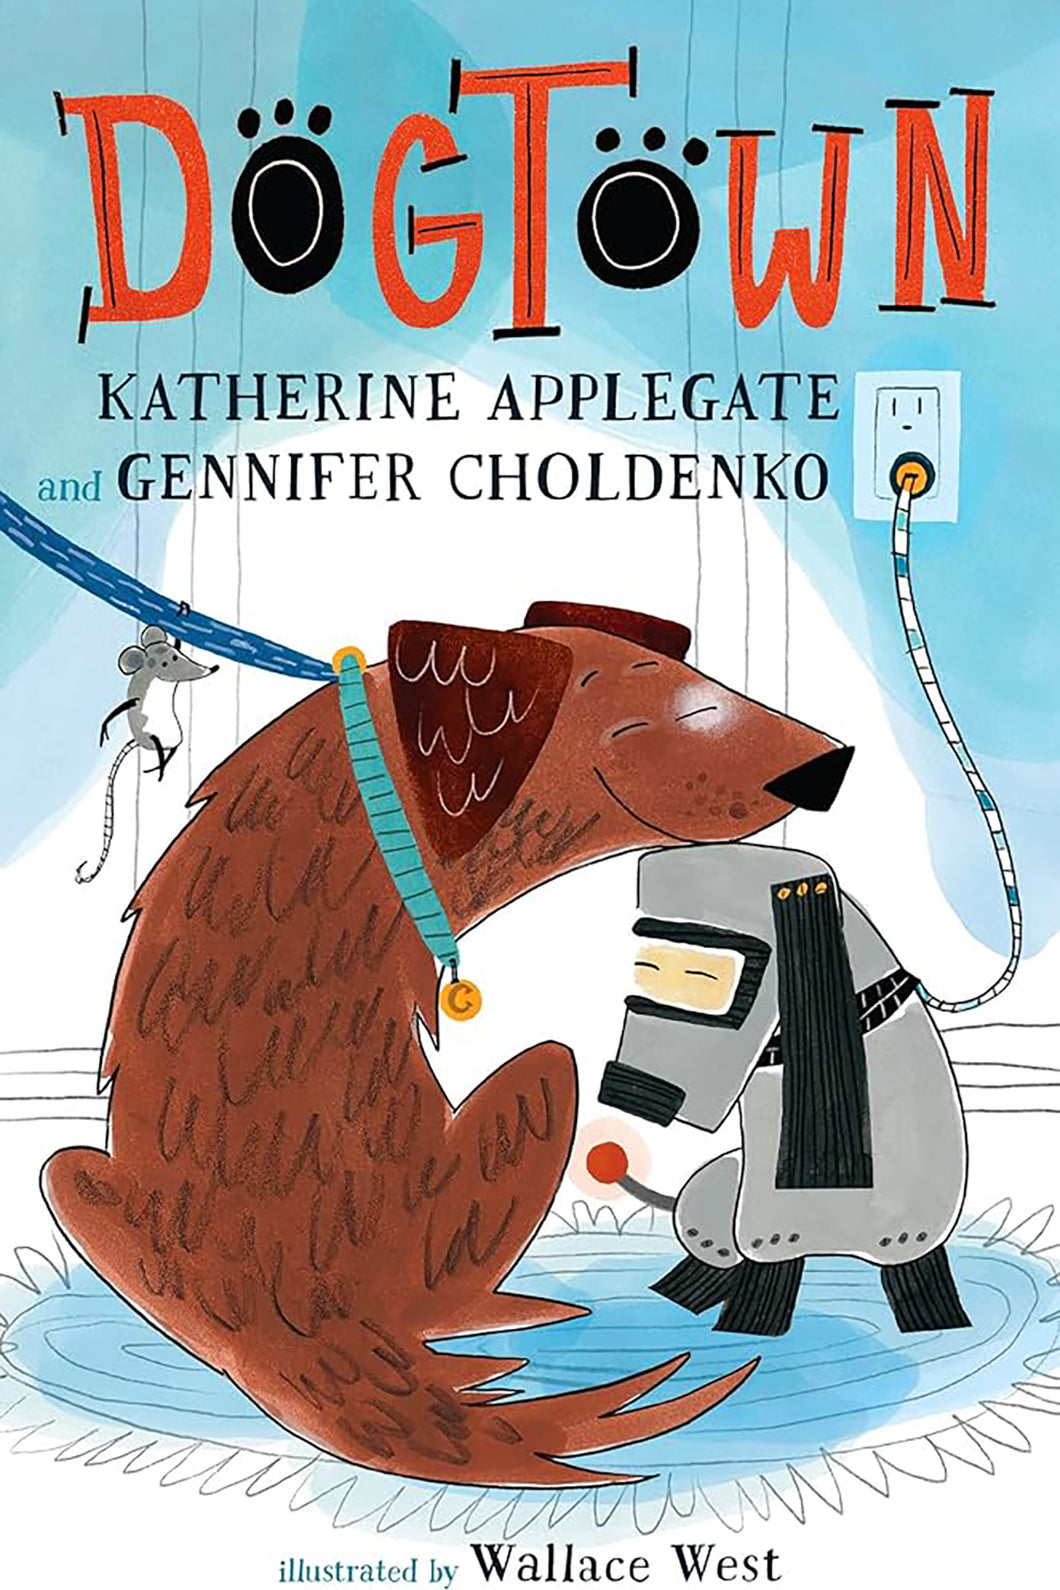 Dogtown by Katherine Applegate & Gennifer Choldenko / Hardcover - NEW BOOK